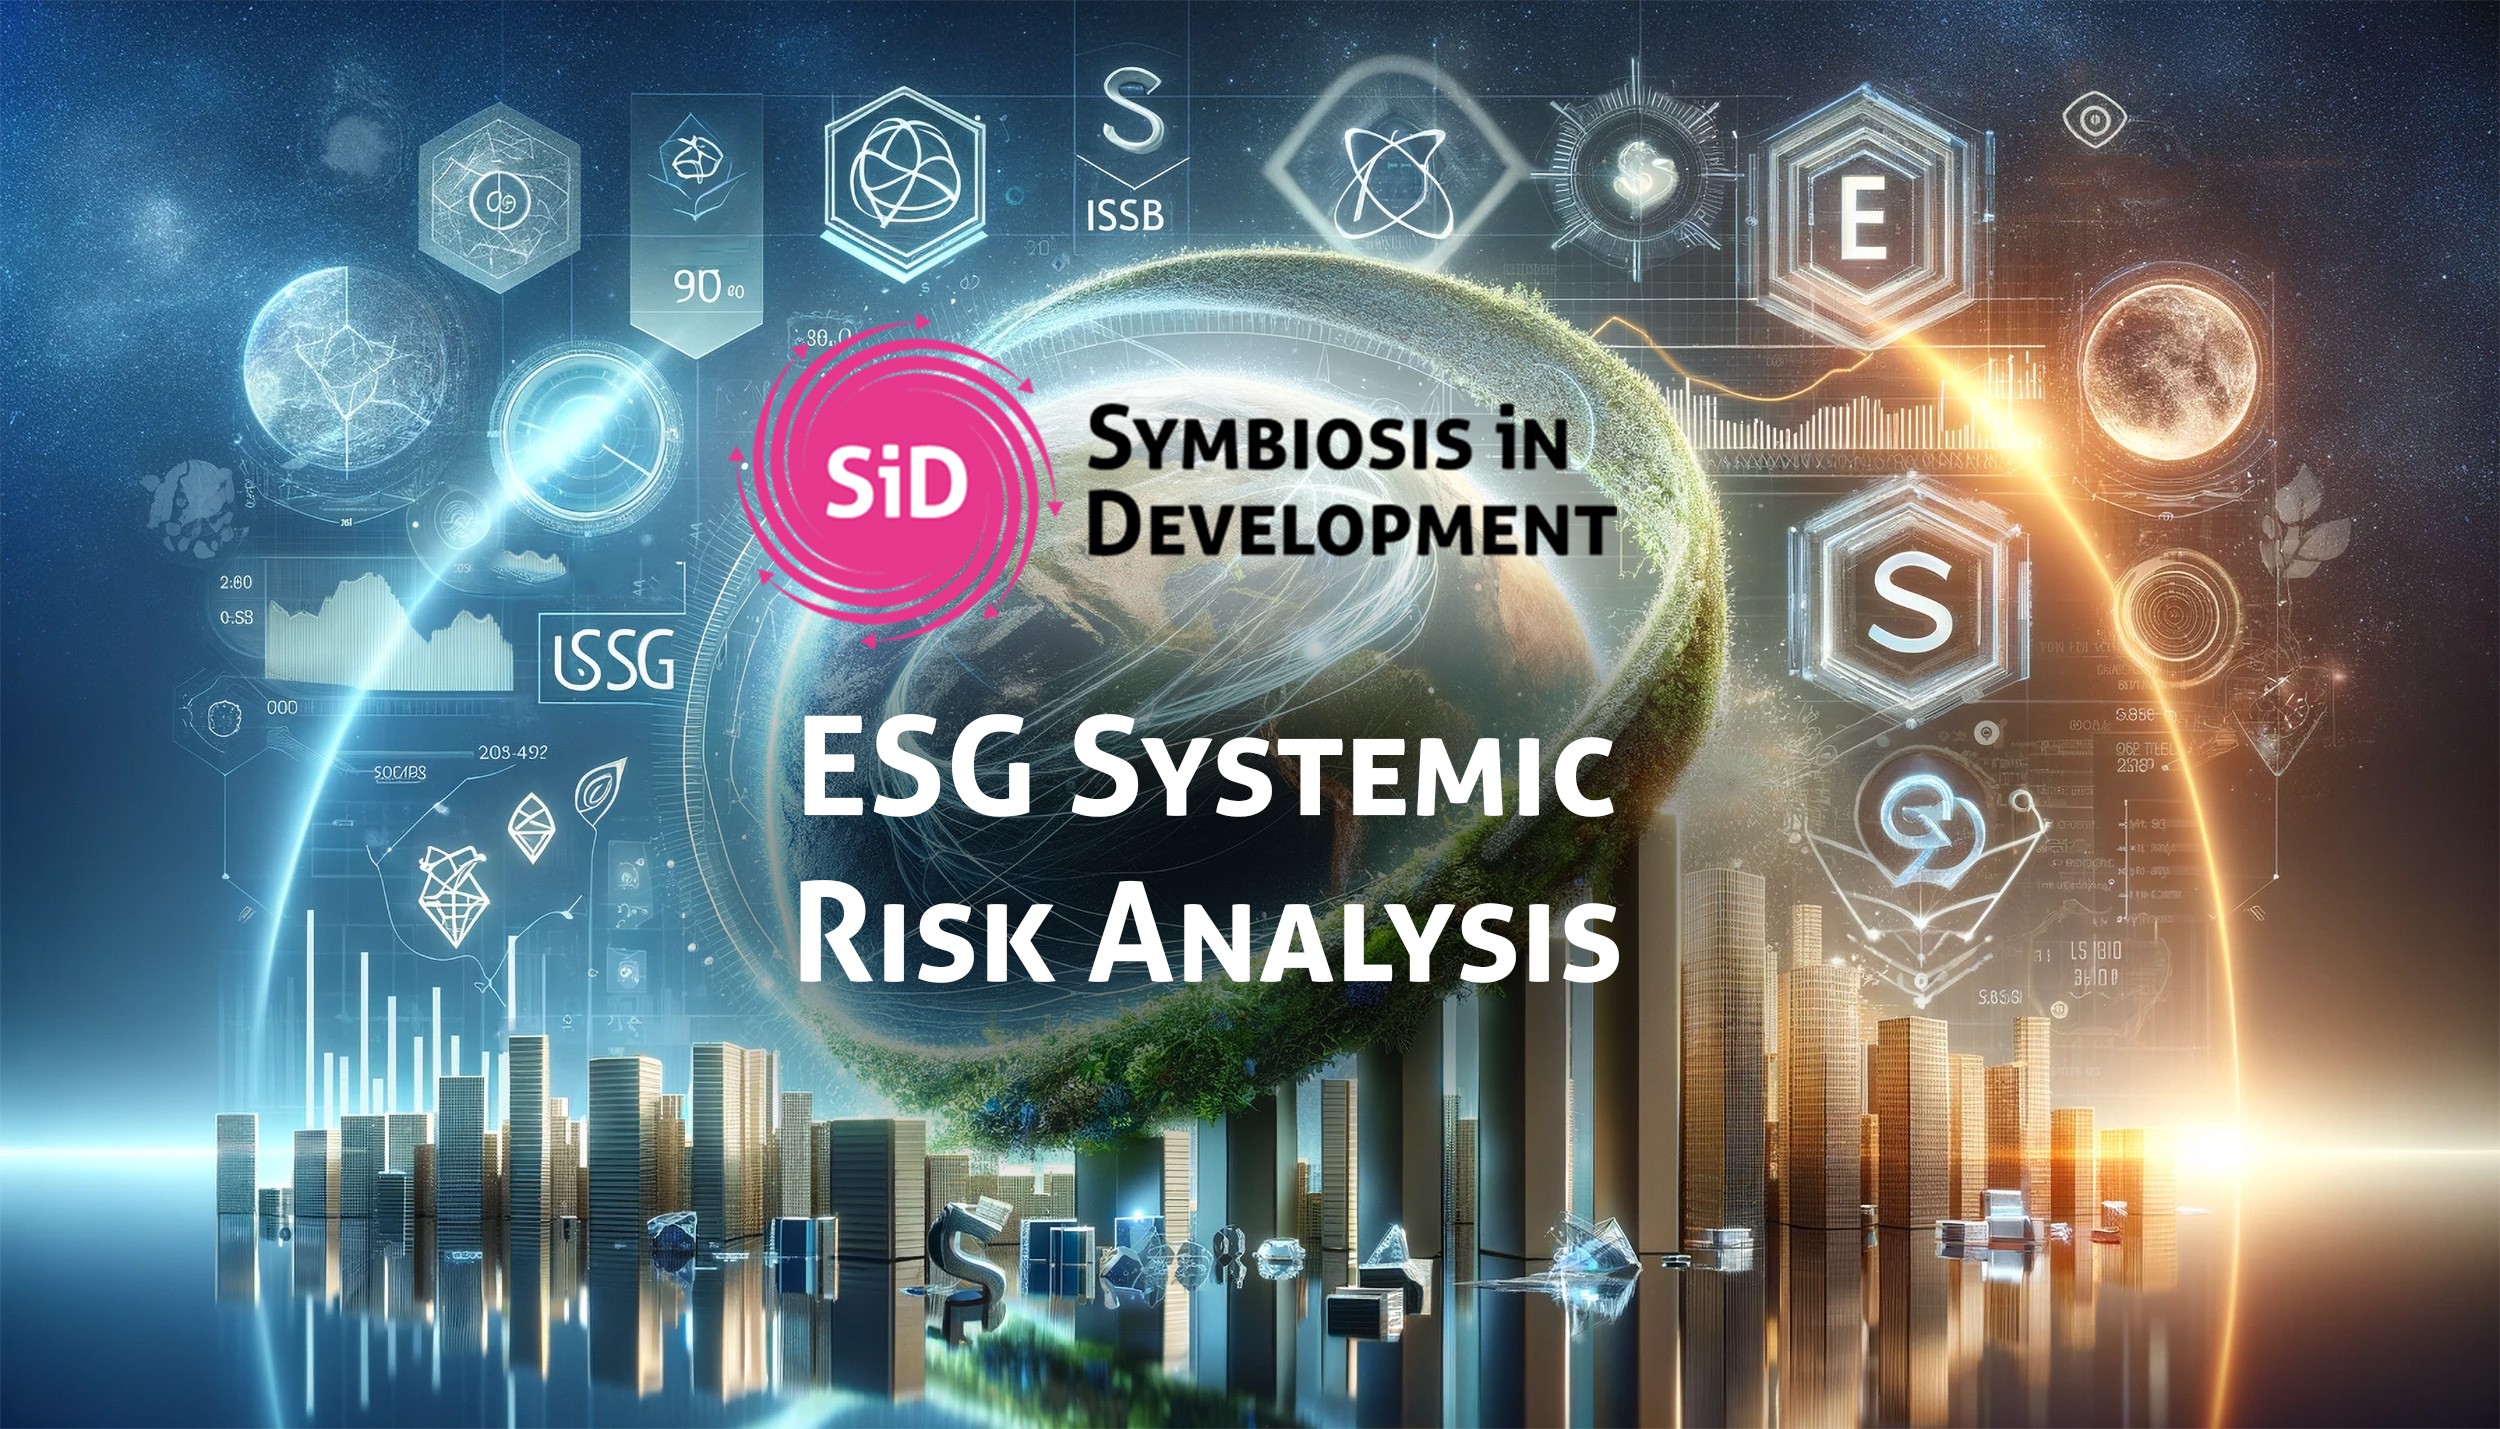 ESG Systemic risk analysis SiD